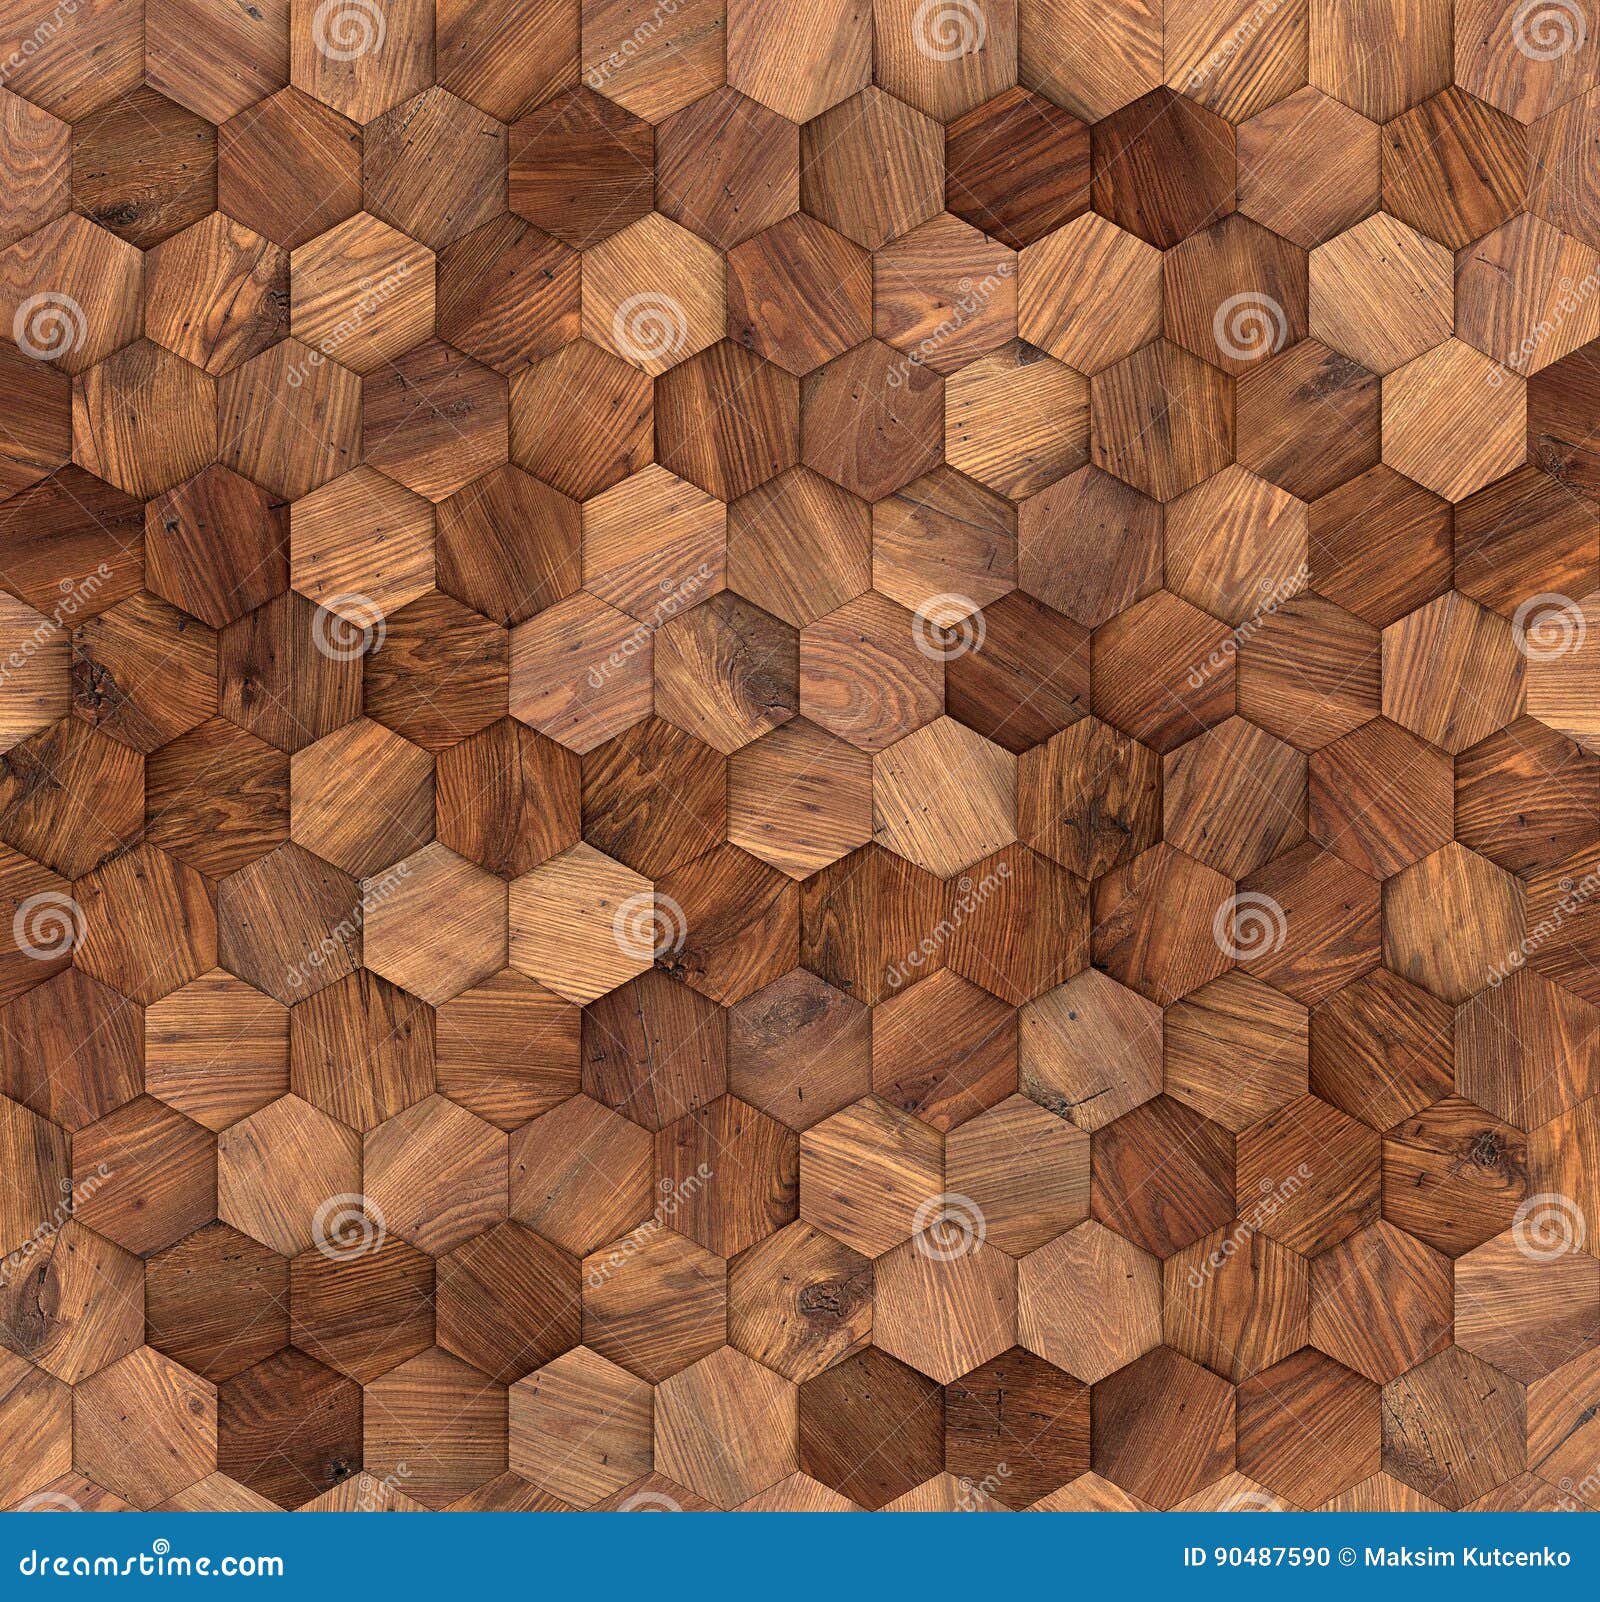 hexagons wood wall seamless texture